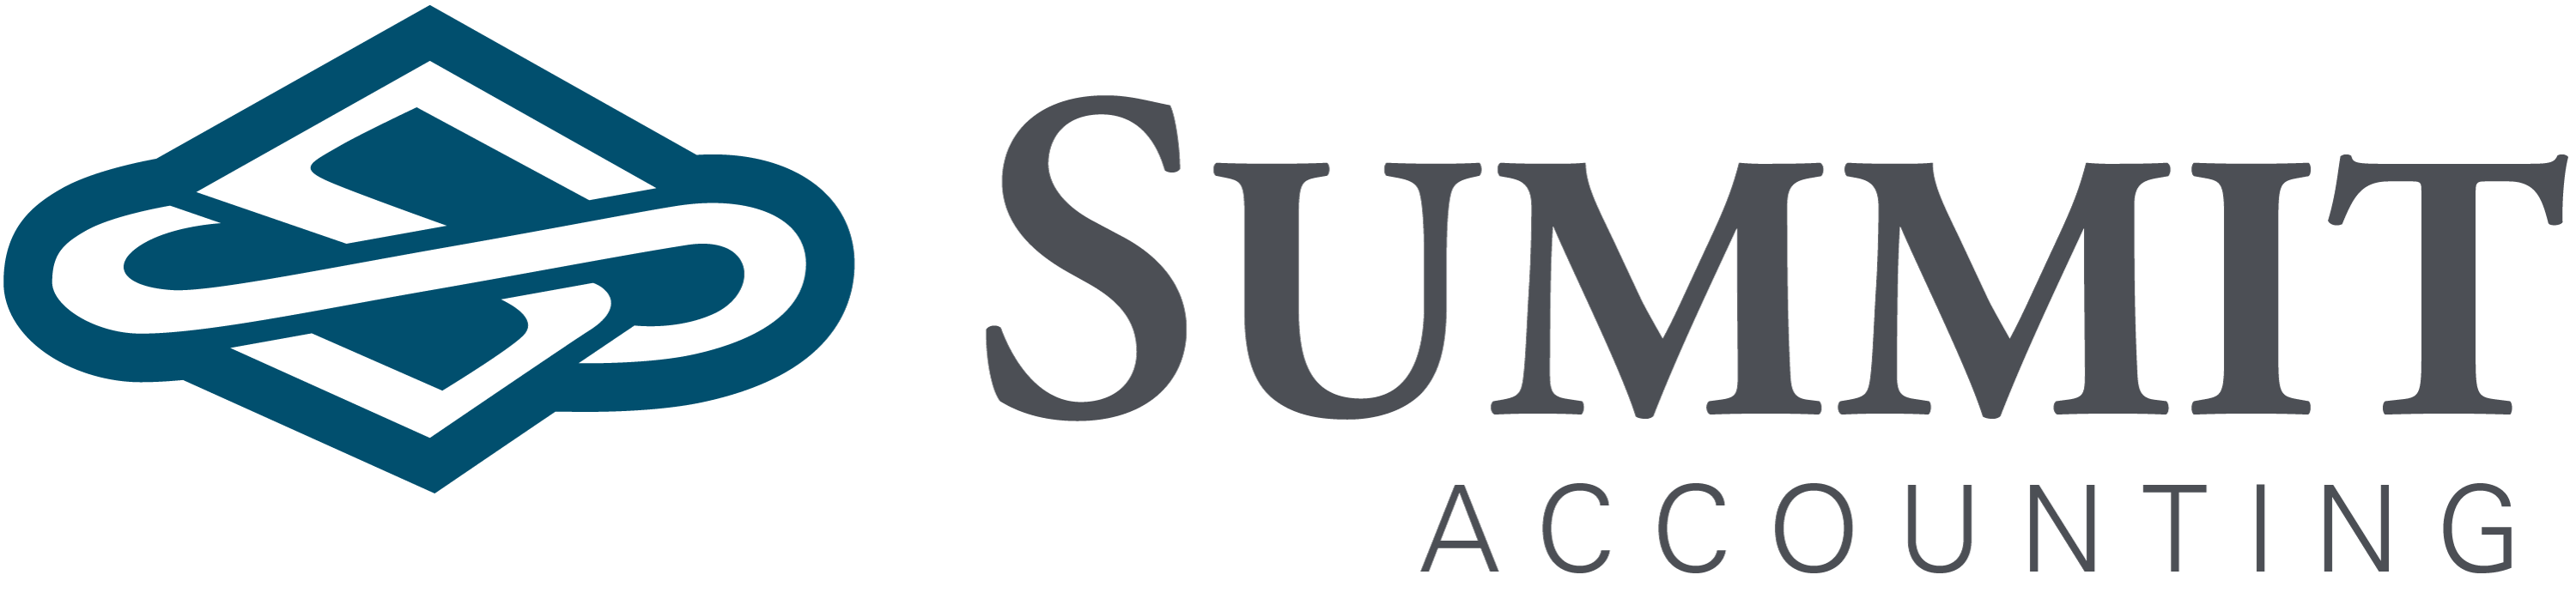 Summit Accounting